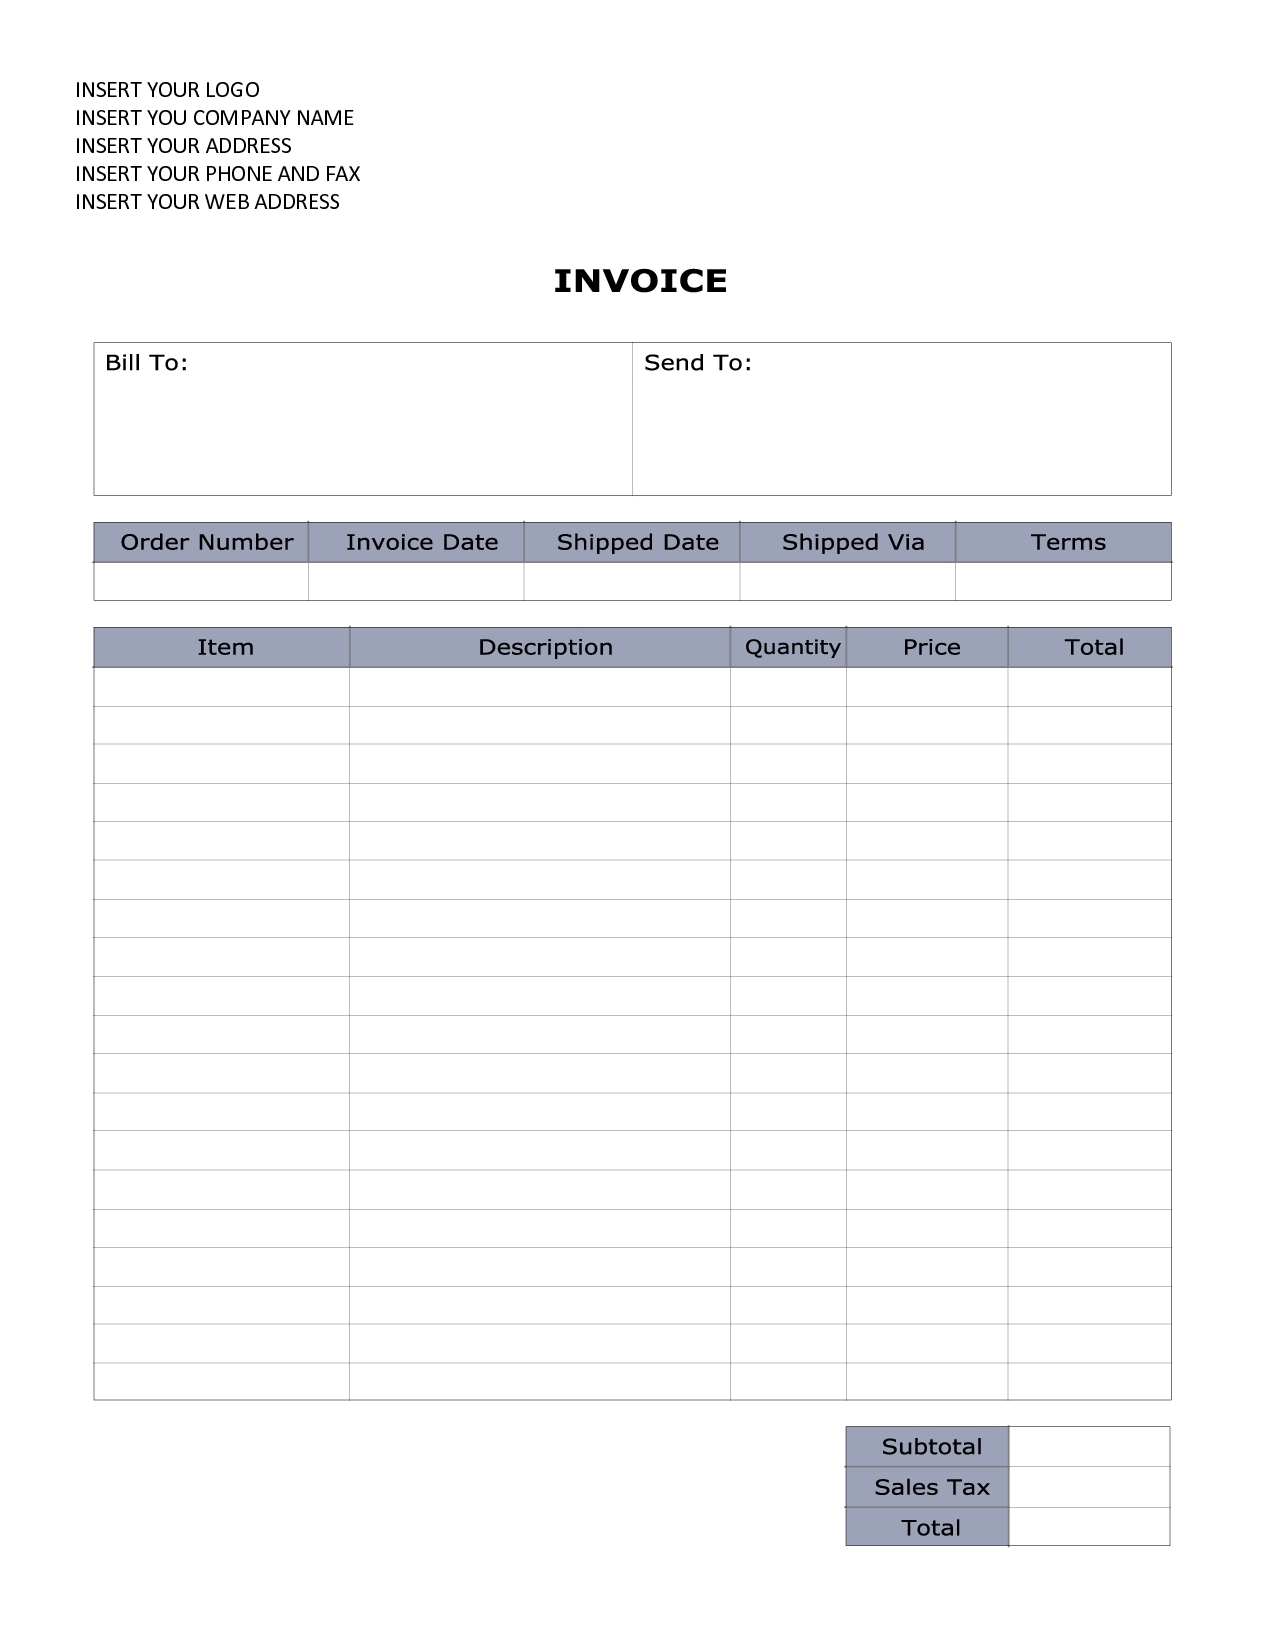 microsoft word invoice template 2010 invoice template free 2016 microsoft word 2010 invoice template